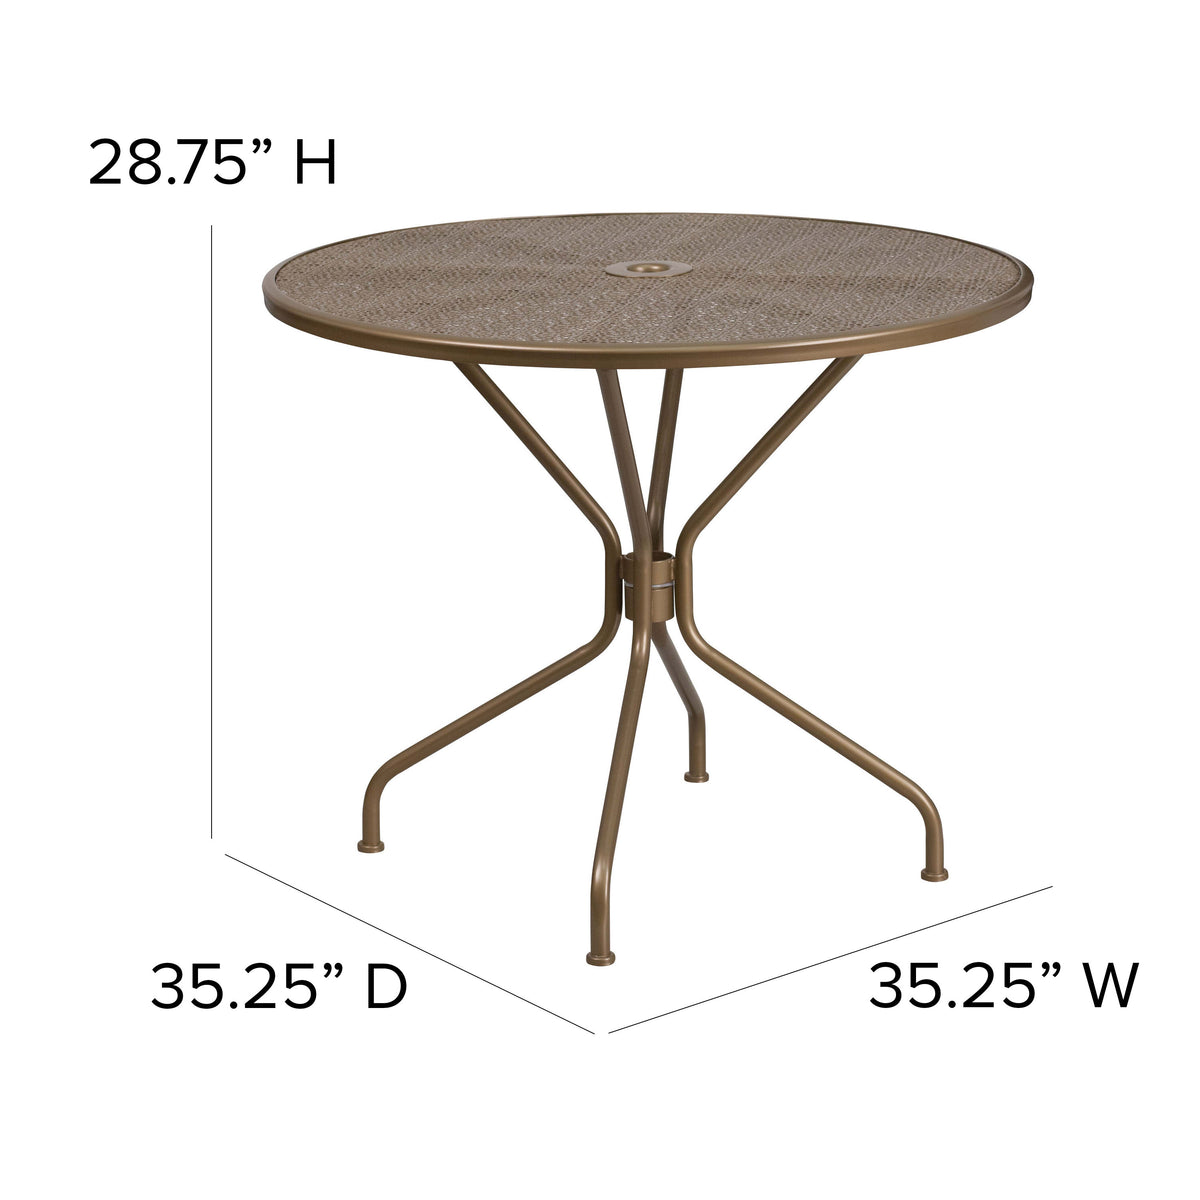 Gold |#| 35.25inch Round Gold Indoor-Outdoor Steel Patio Table-Umbrella Hole-Restaurant